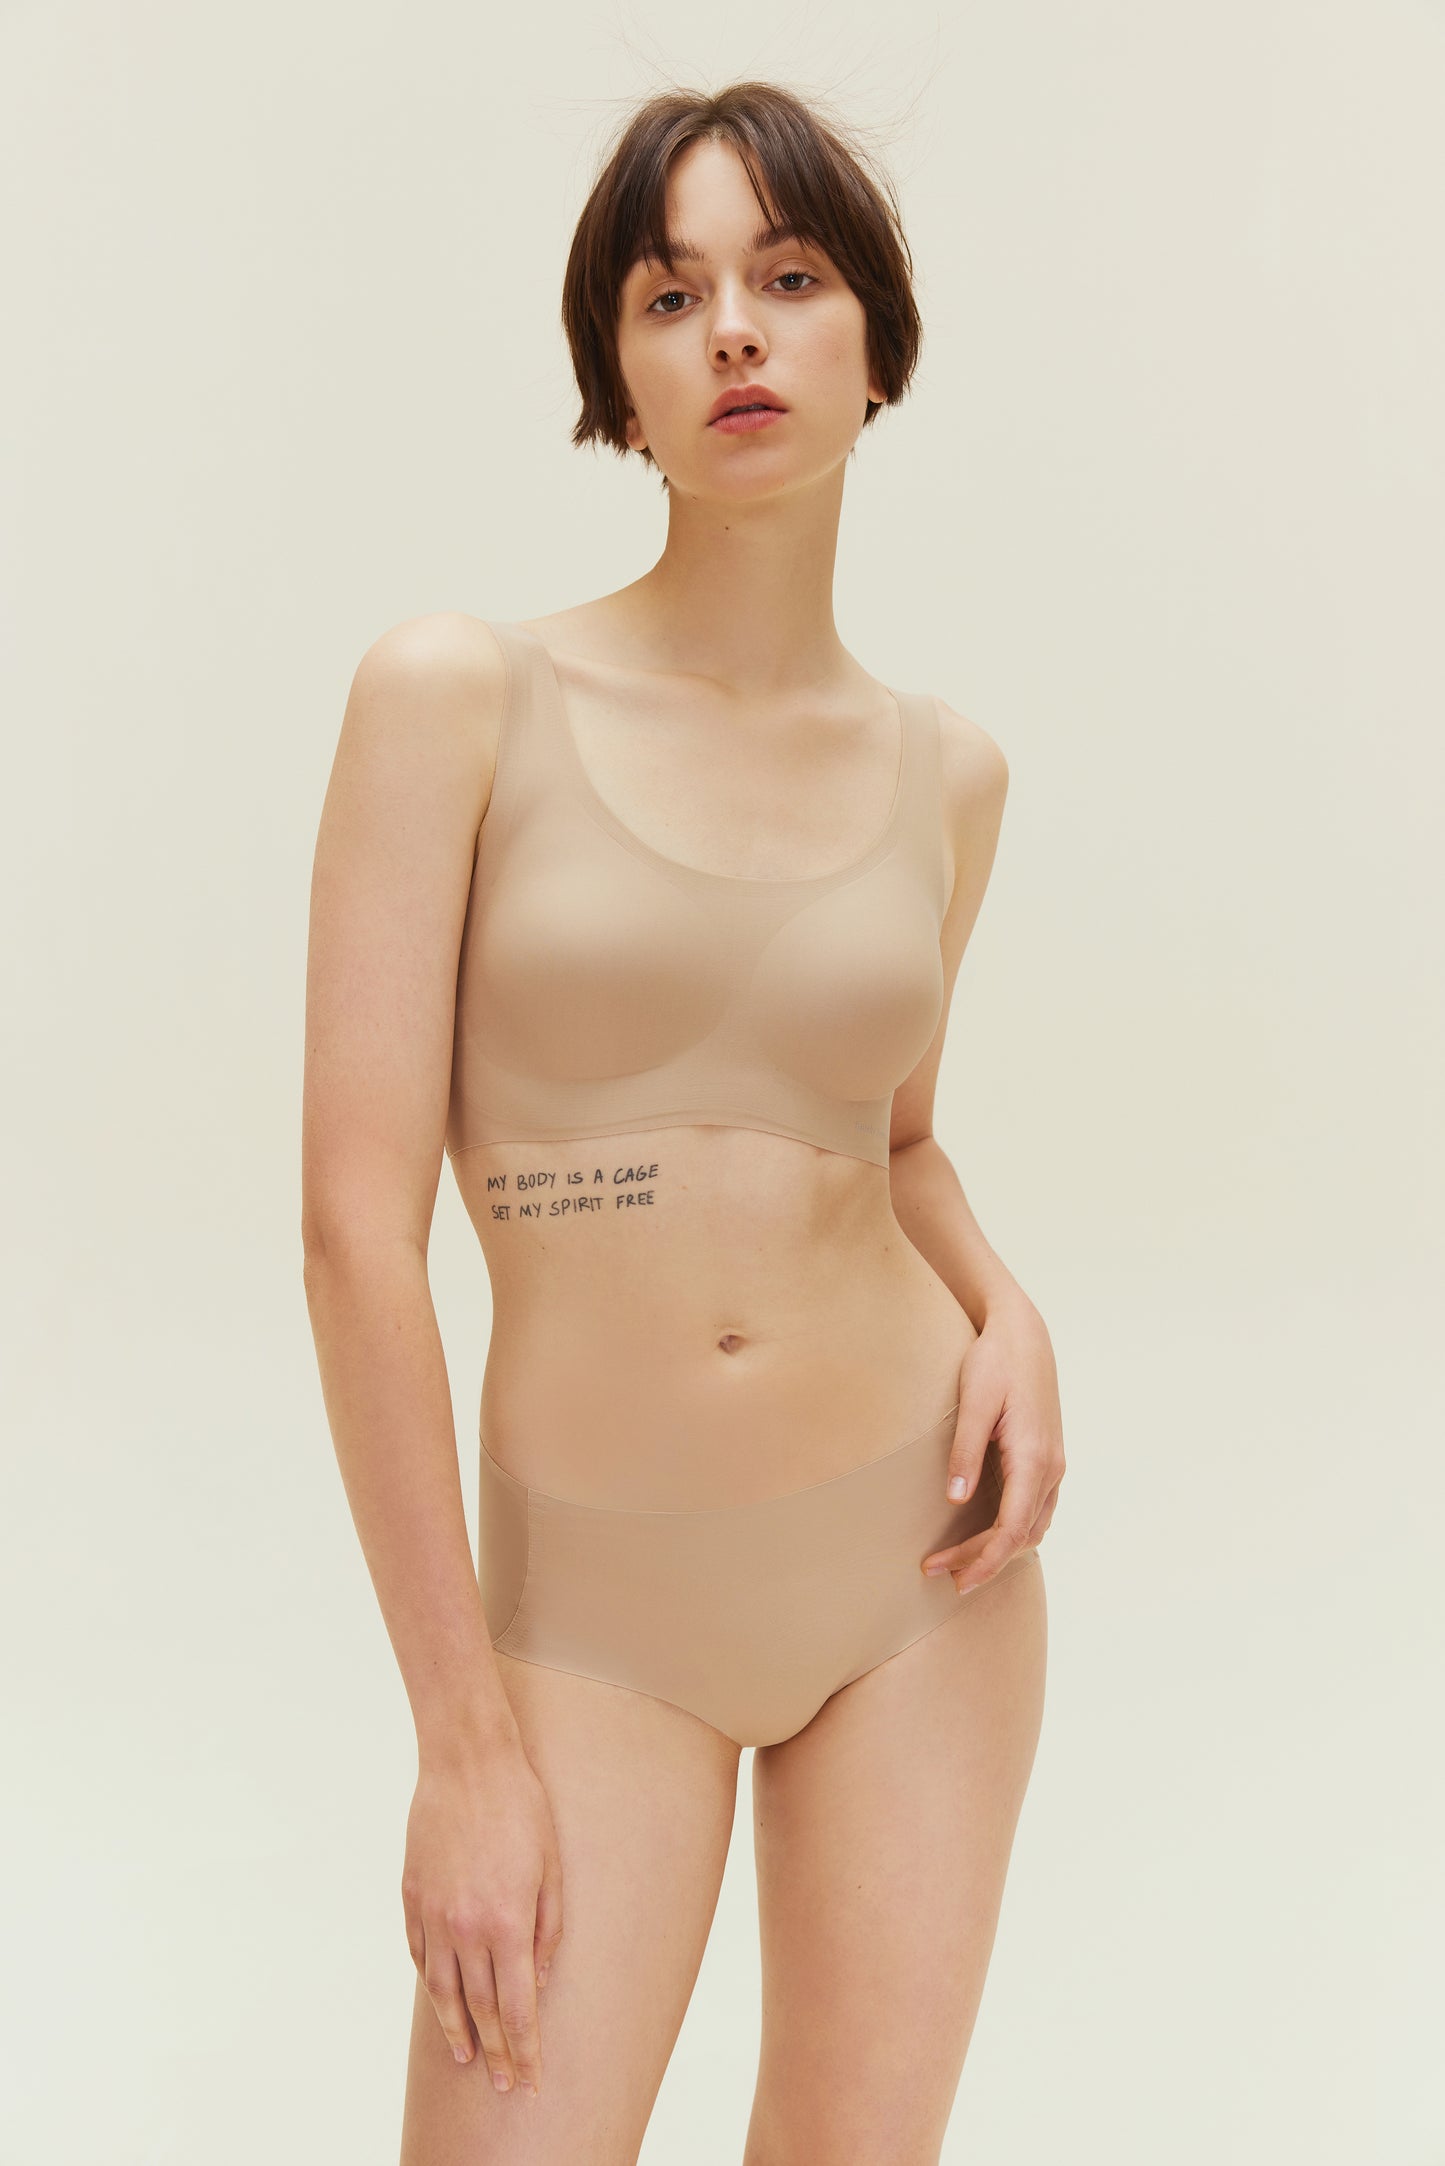 woman wearing nude color underwear